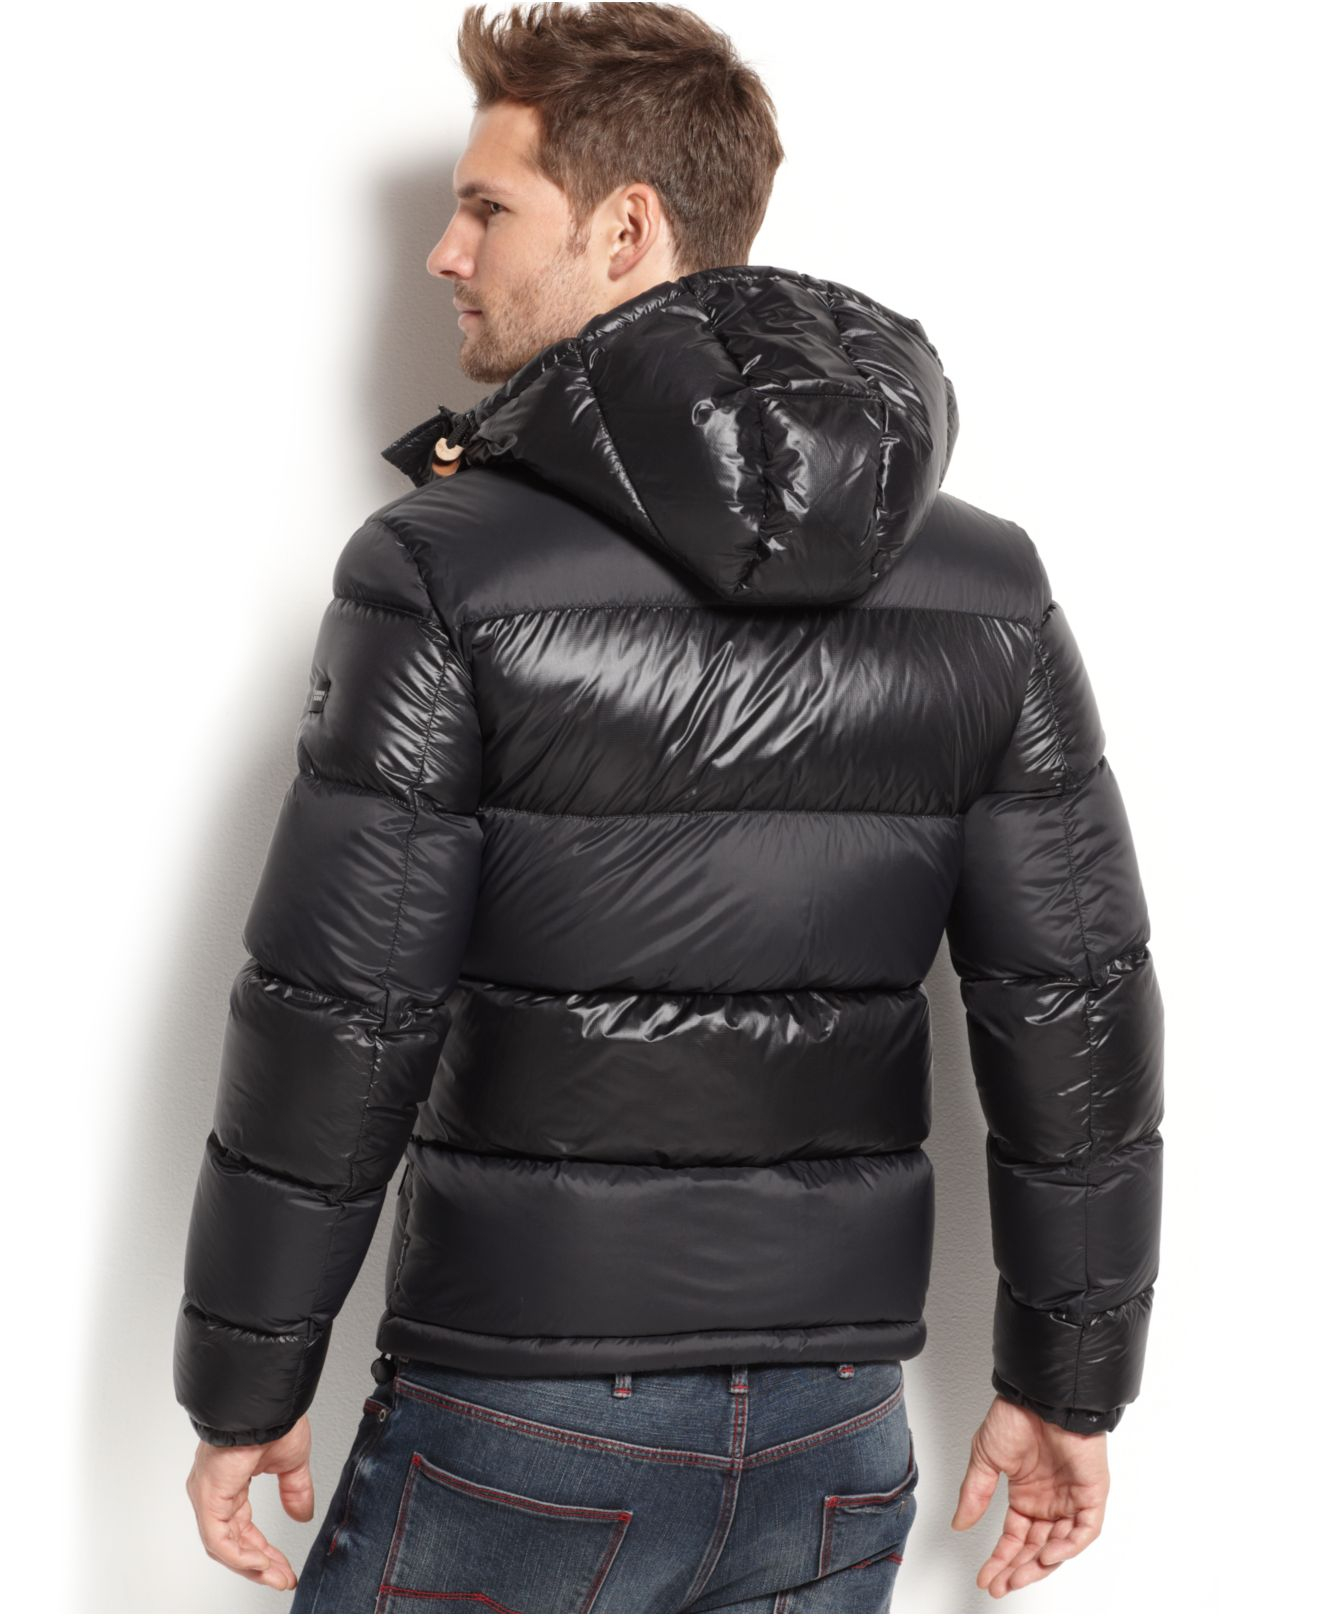 Armani Black Puffer Jacket Best Sale, SAVE 37% 